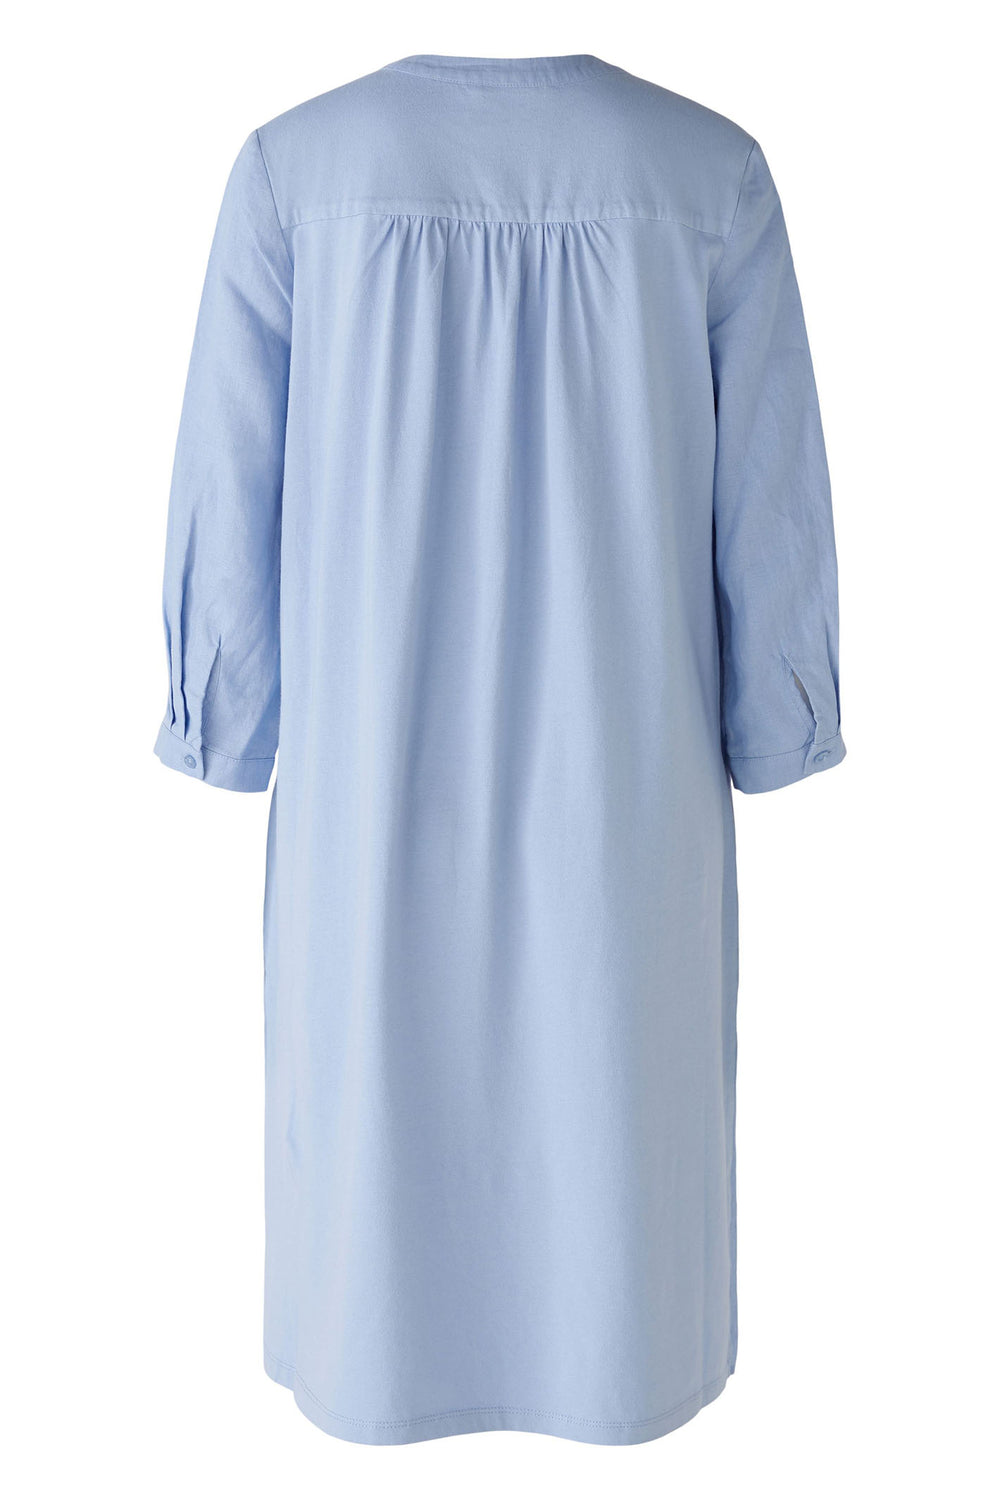 Oui 87560 Light Blue Split Neck A-Line Linen Dress With Sleeves - Dotique